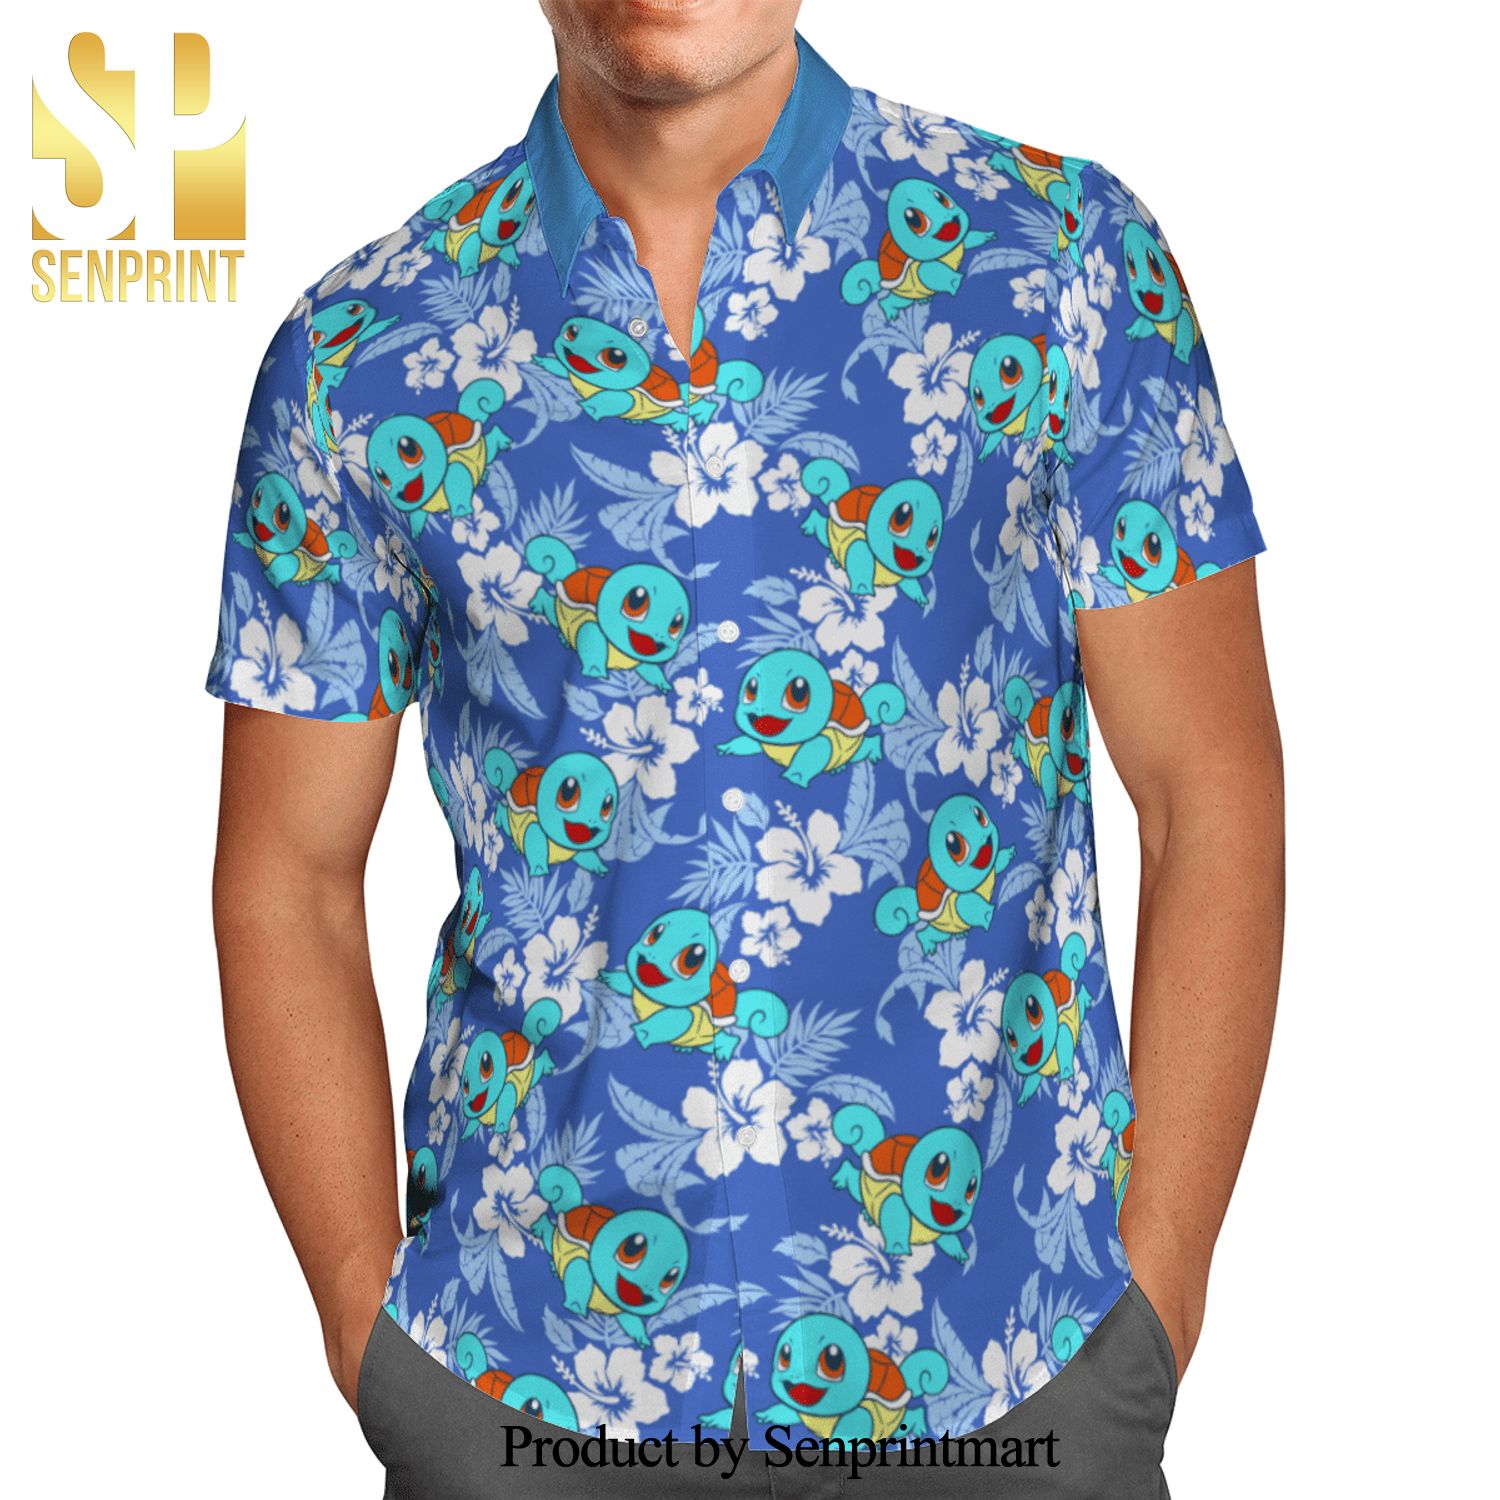 Pokemon Squirtle Tropical Hibiscus Full Printing Hawaiian Shirt – Blue